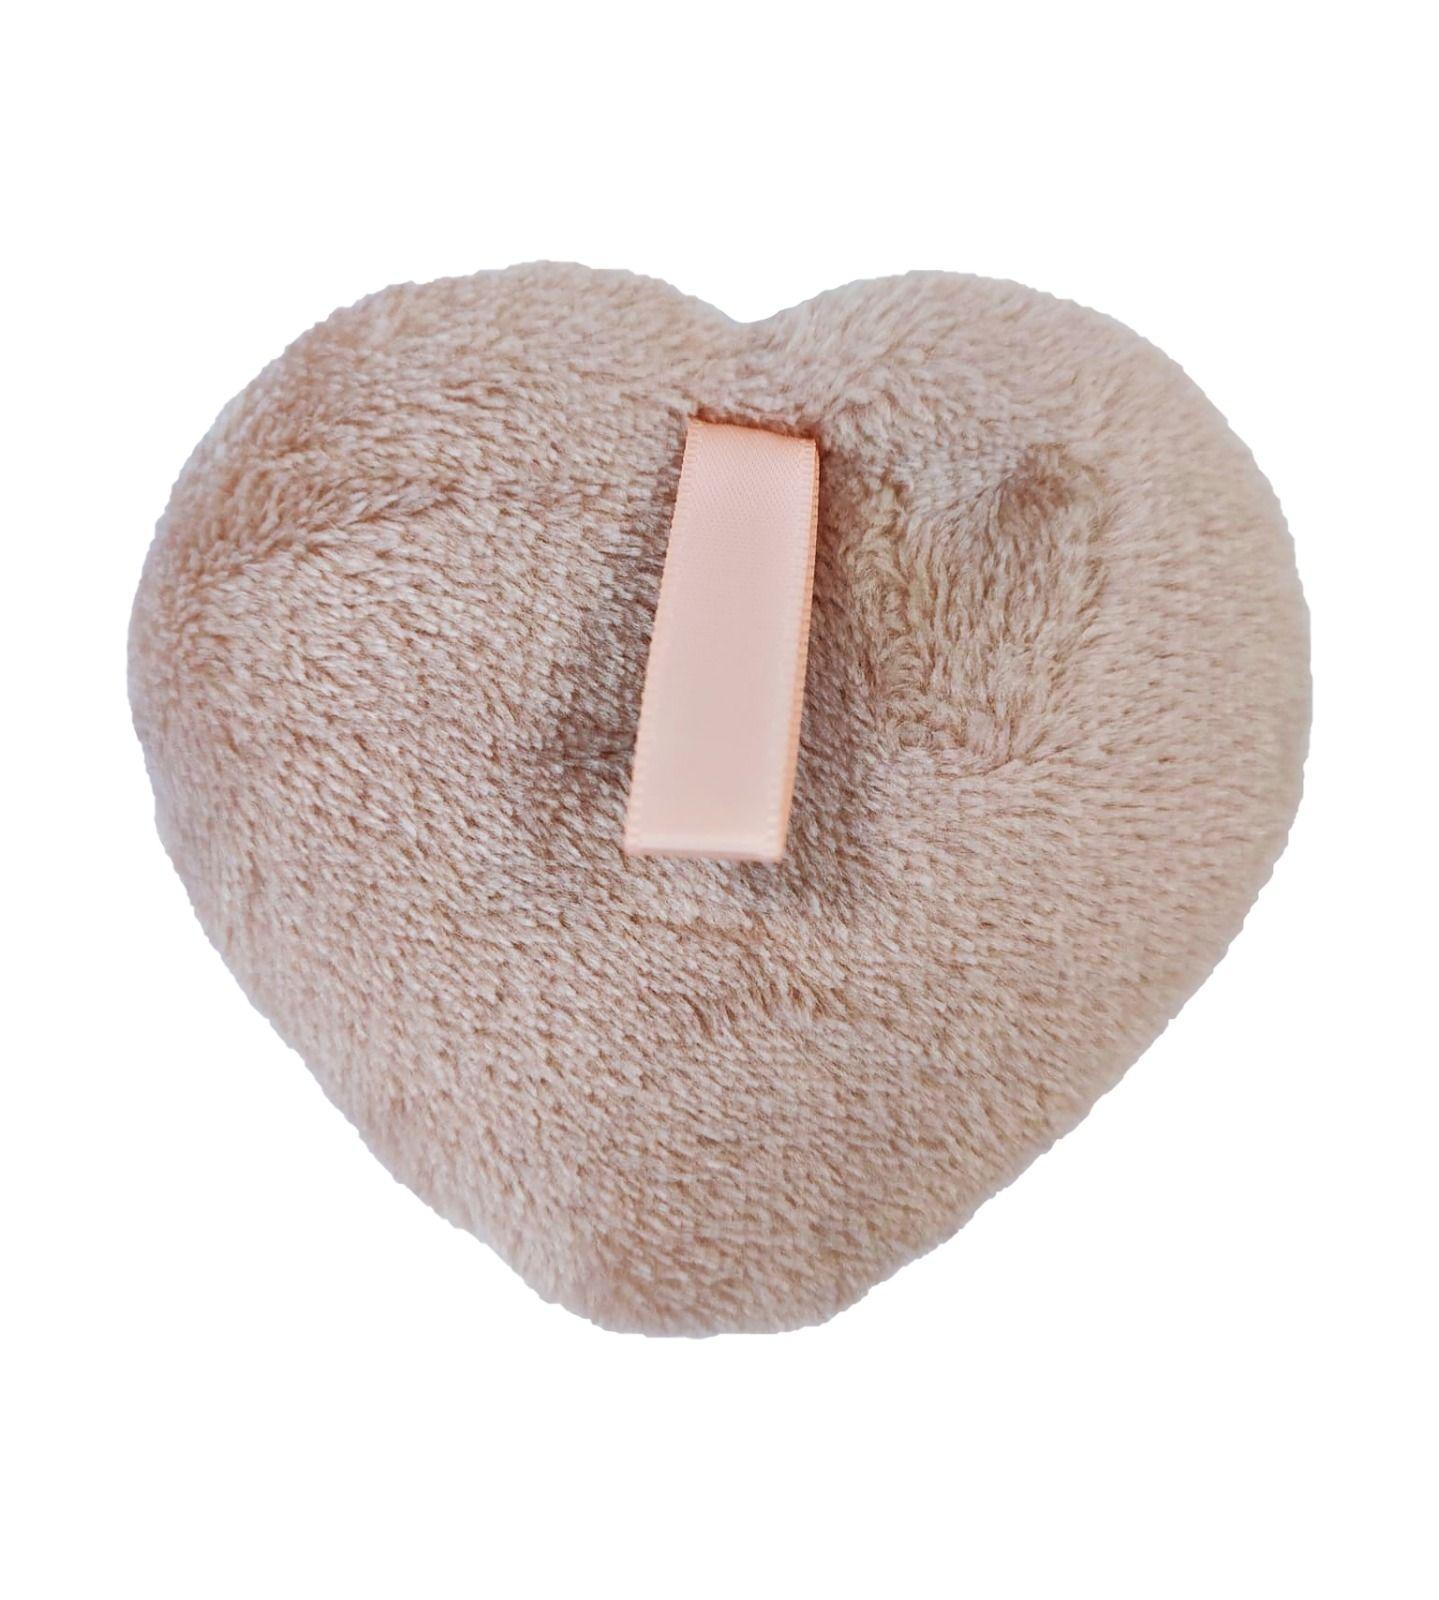 Reusable makeup remover sponge BLING - heart, mix of colors